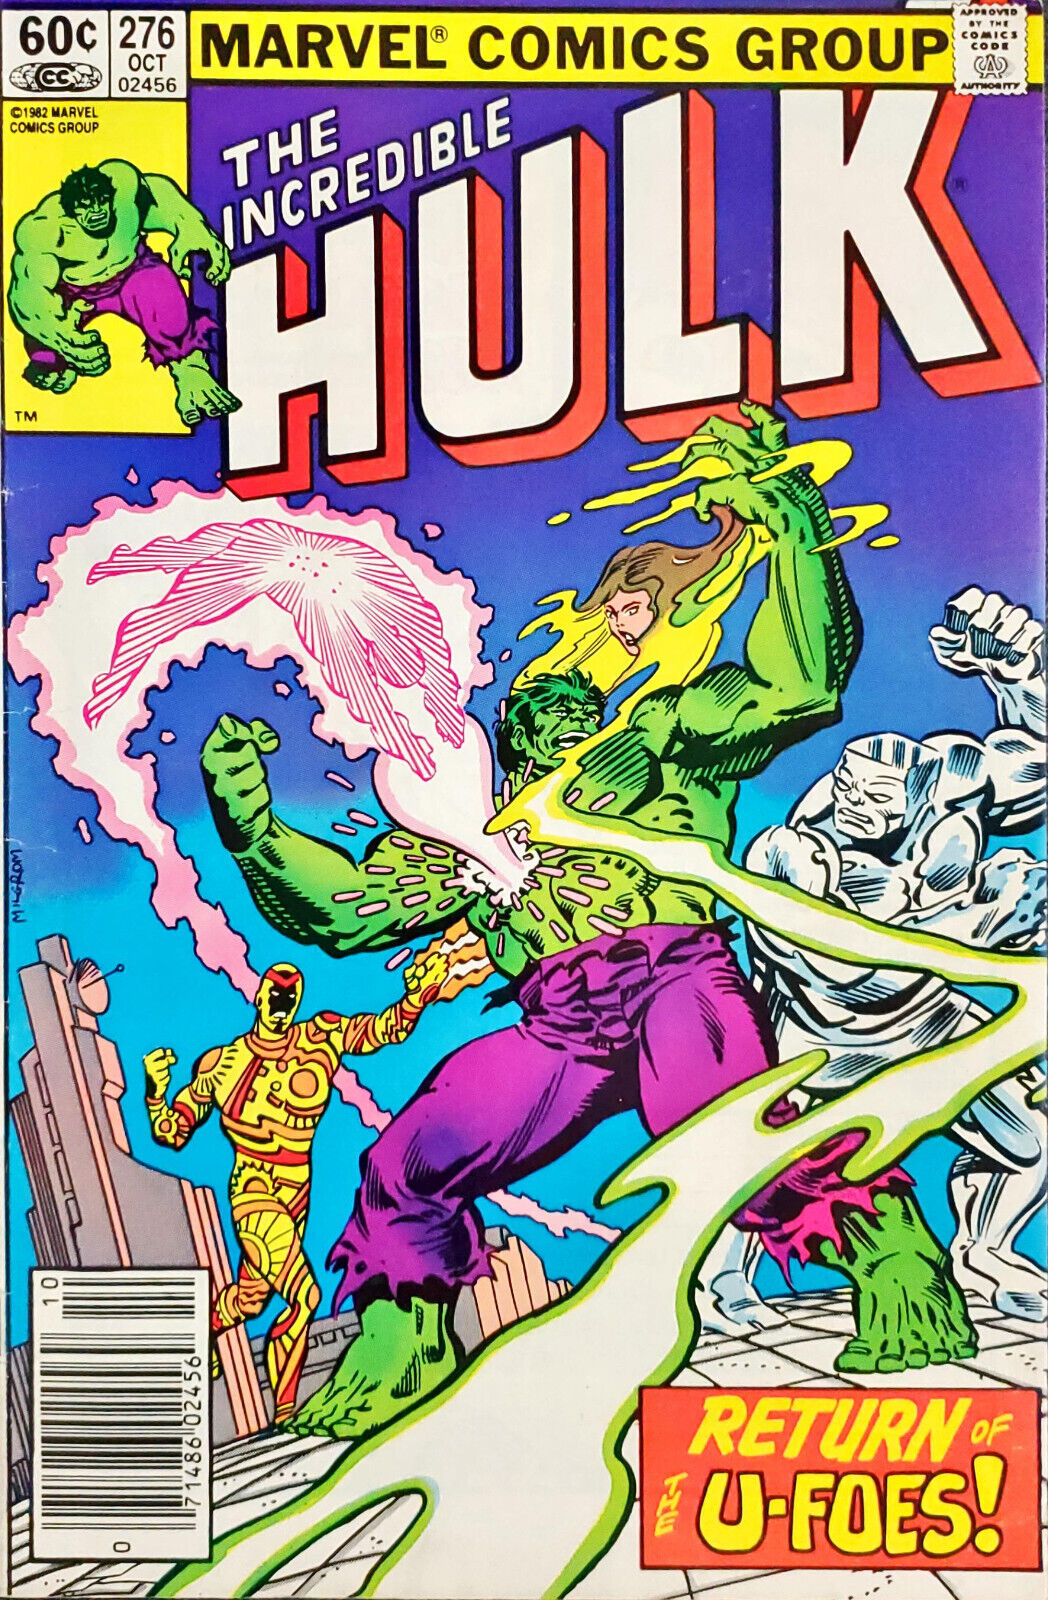 The Incredible Hulk : #276 October 1982